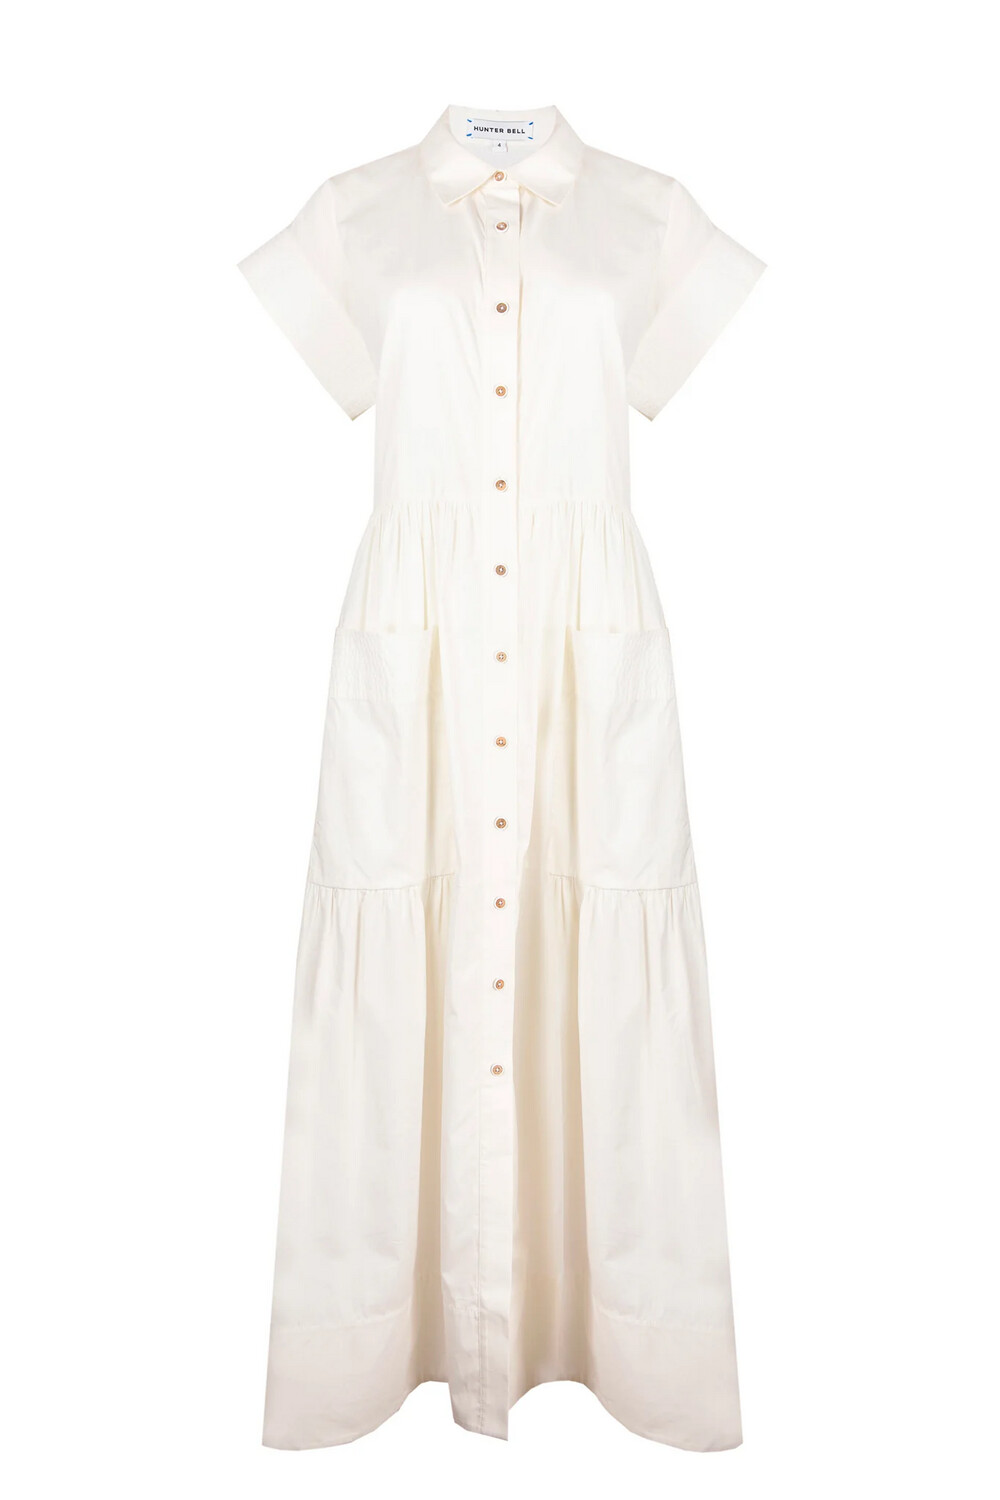 Hunter Bell Sarah Dress in Bright White